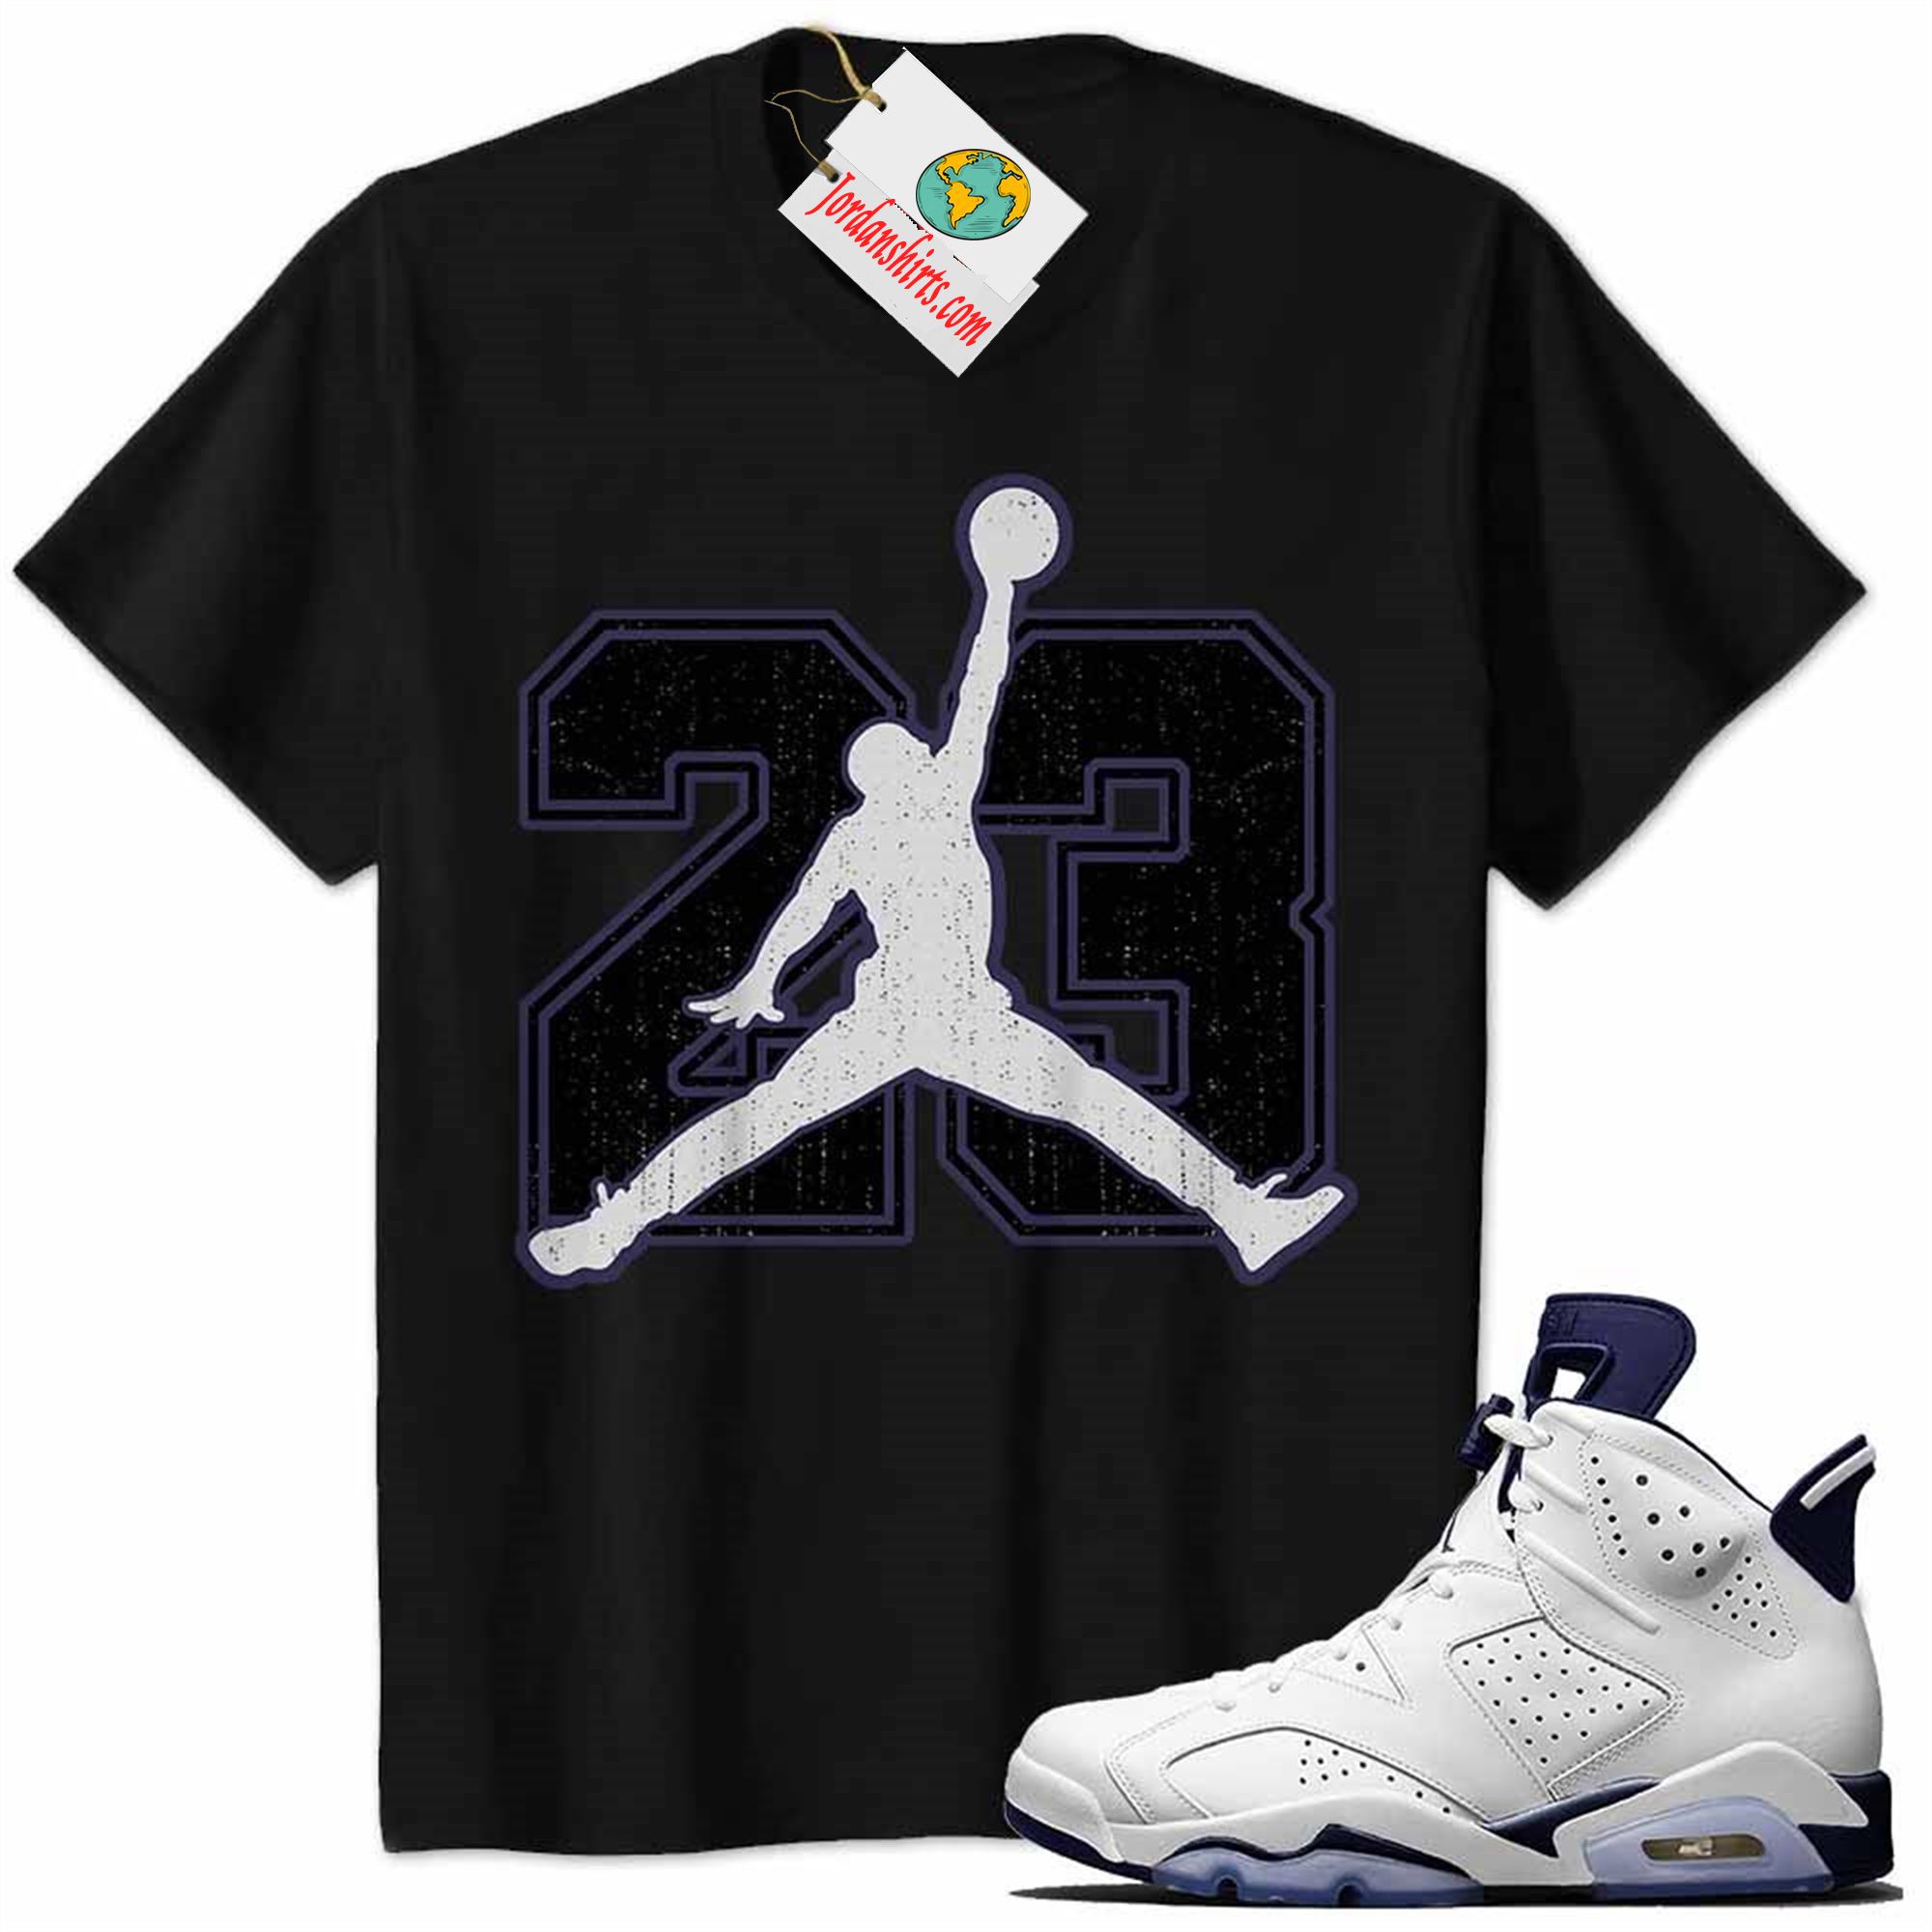 Jordan 6 Shirt, Jordan 6 Midnight Navy Shirt Jumpman No23 Black Size Up To 5xl